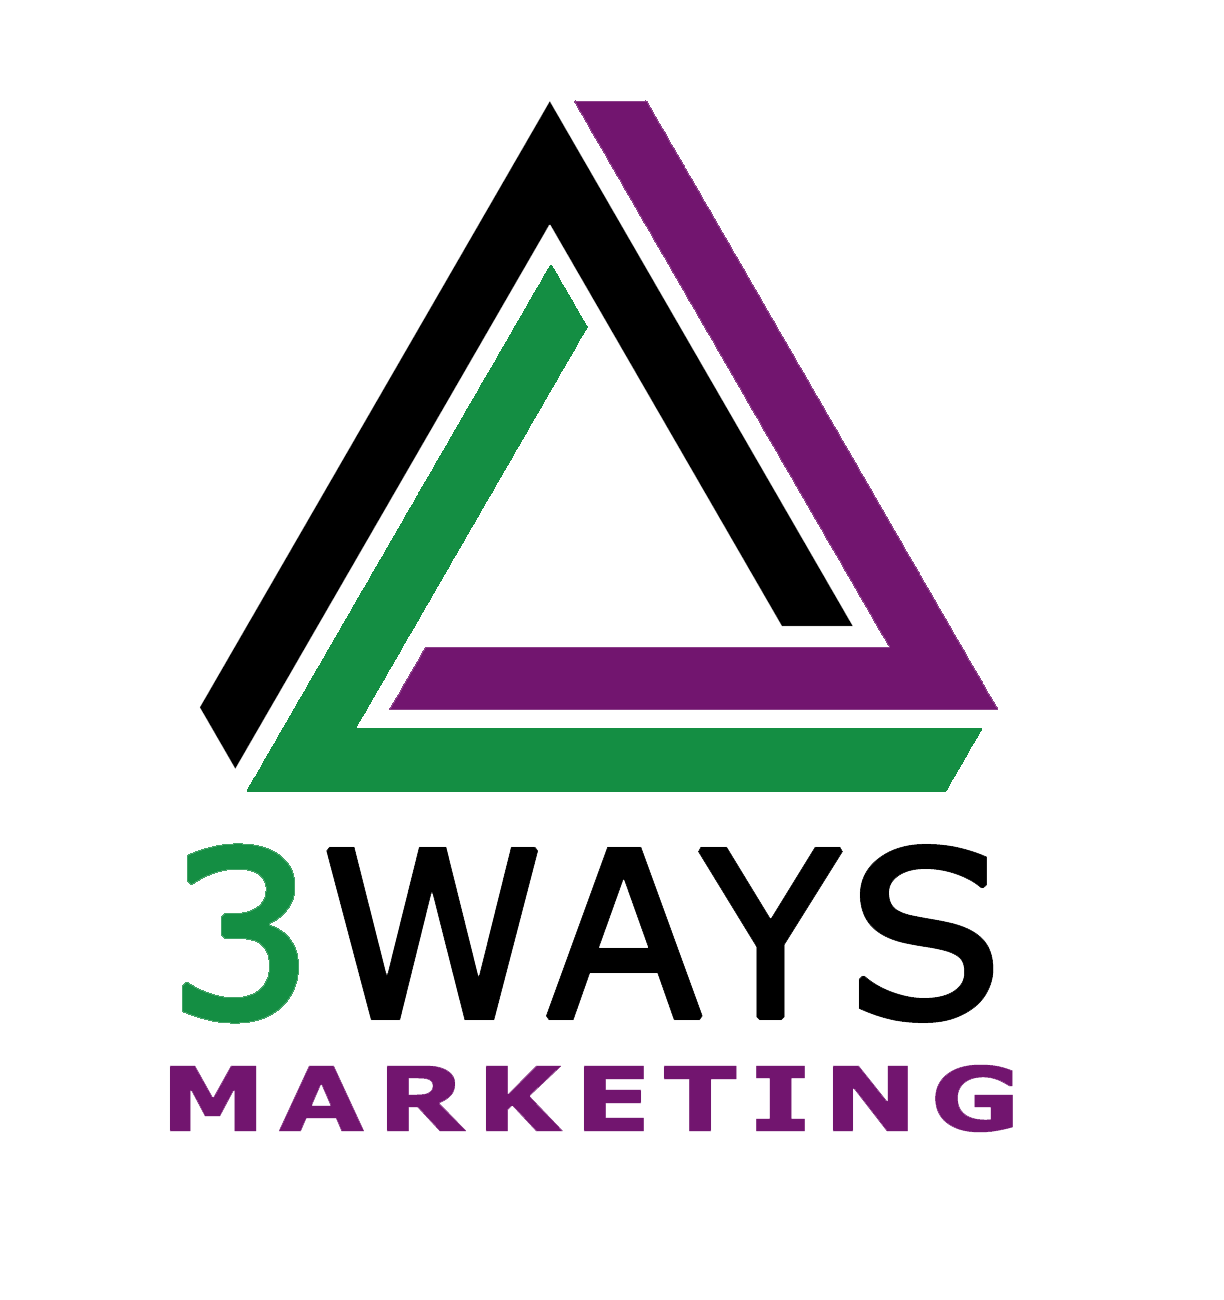 3 Ways Marketing profile on Qualified.One